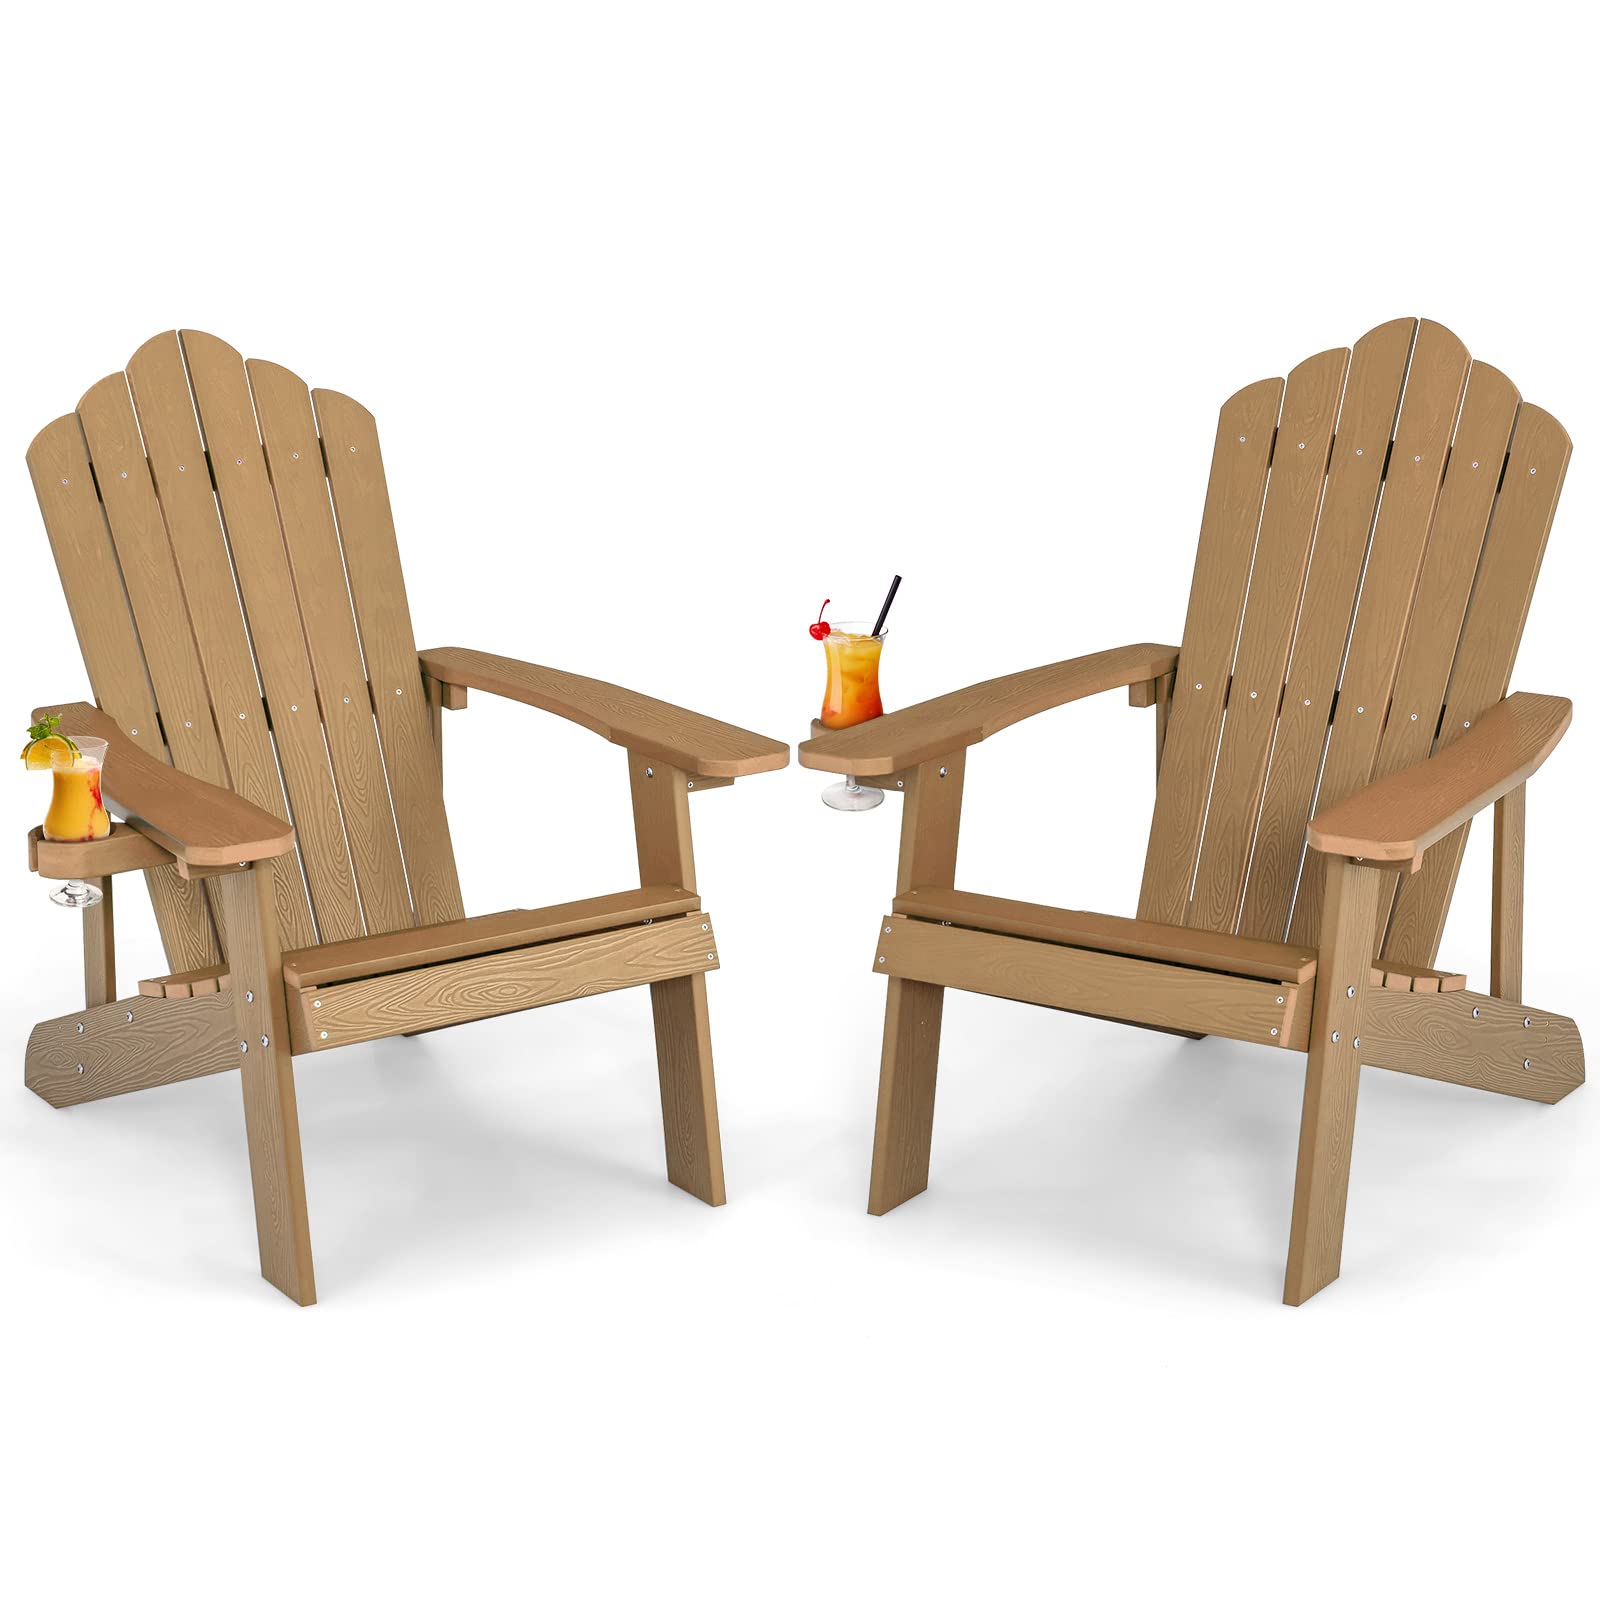 Giantex Outdoor Adirondack Chair, Teak